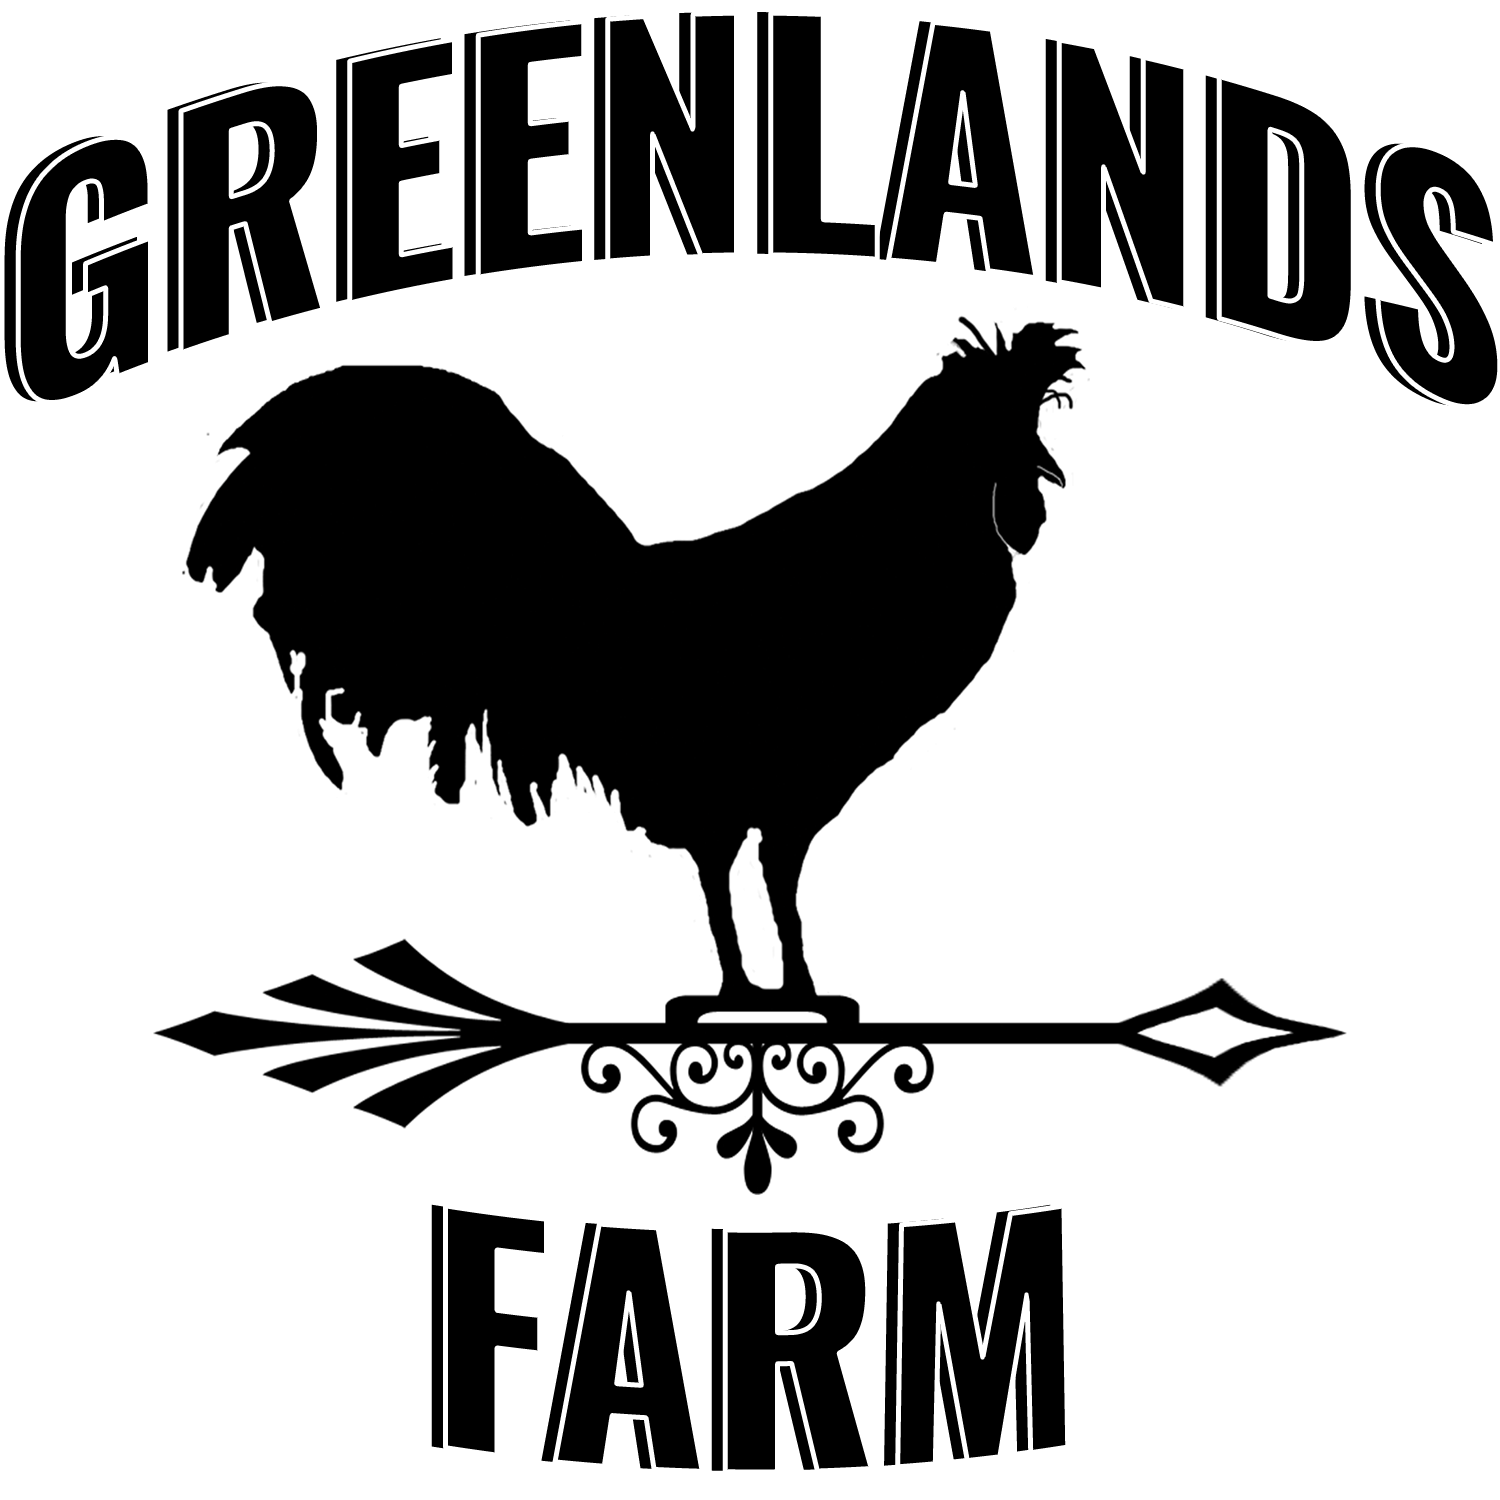 Greenlands Farm